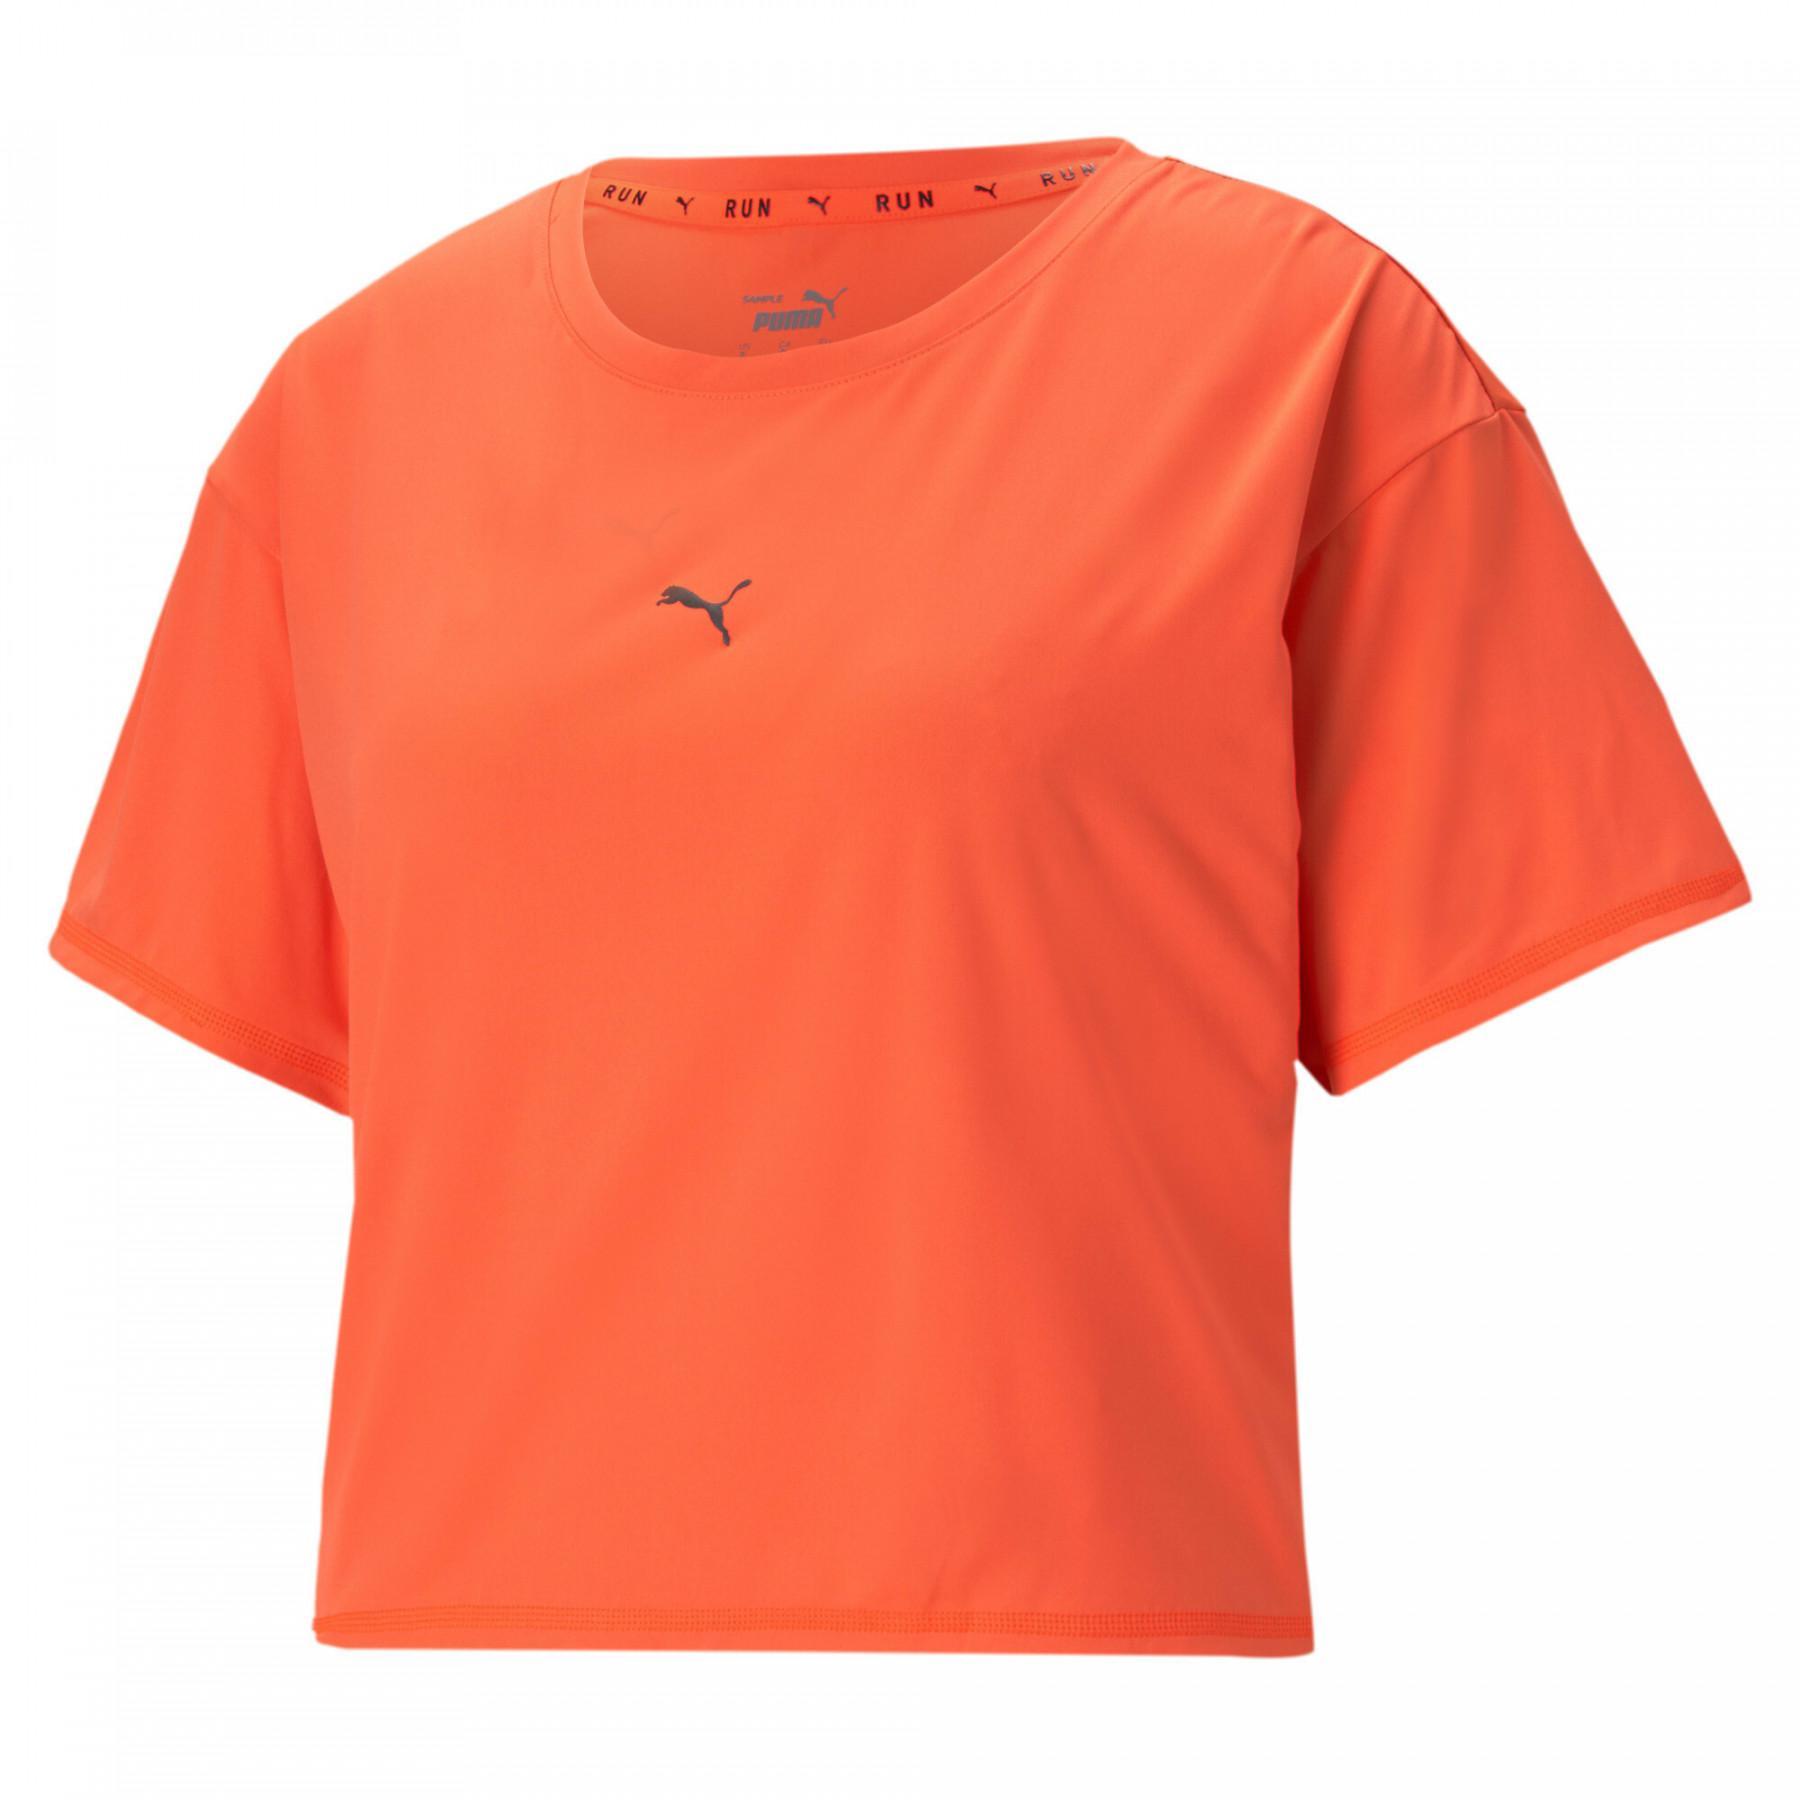 - Textile Handball polos Woman\'s wear Run T-shirt - - Cool Adapt T-shirts and Launch Puma